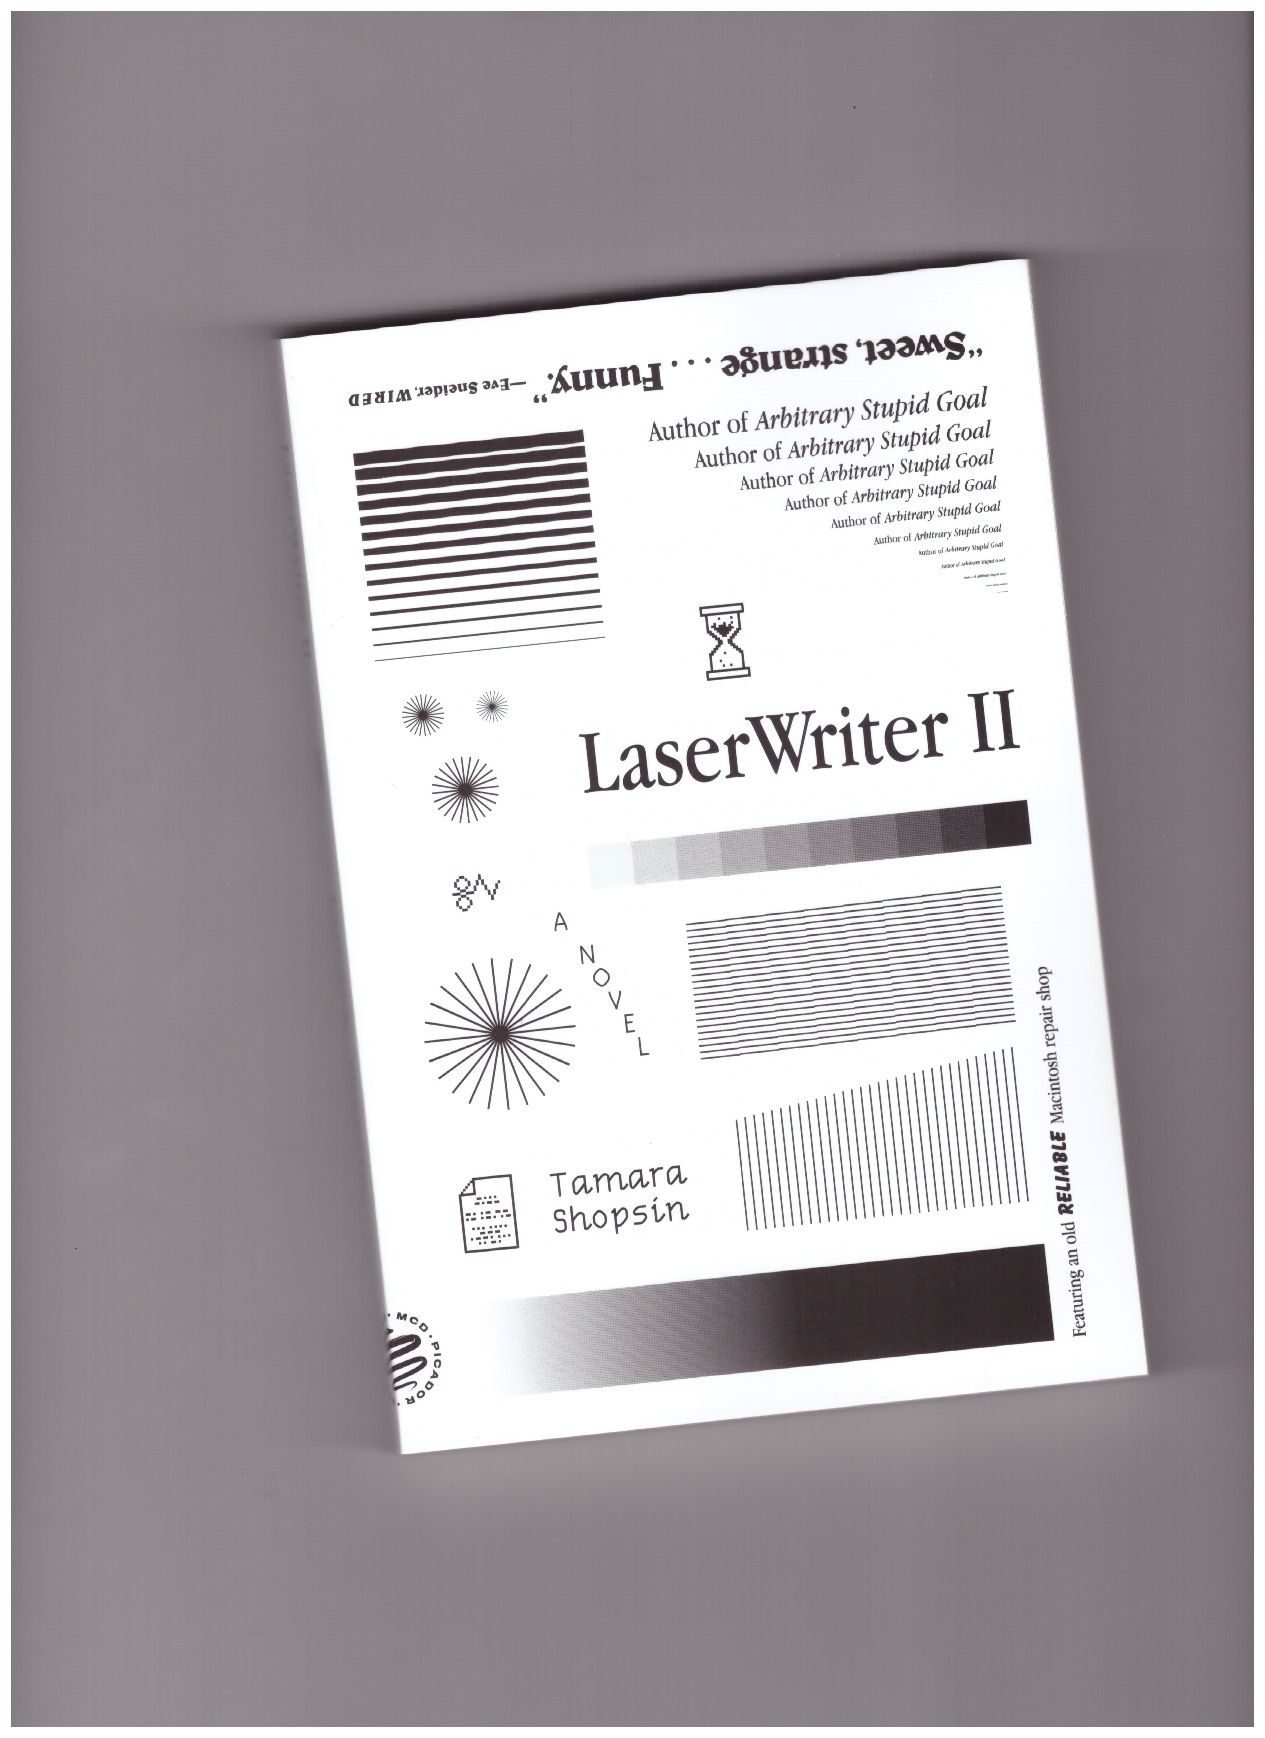 SHOPSIN, Tamara - LaserWriter II